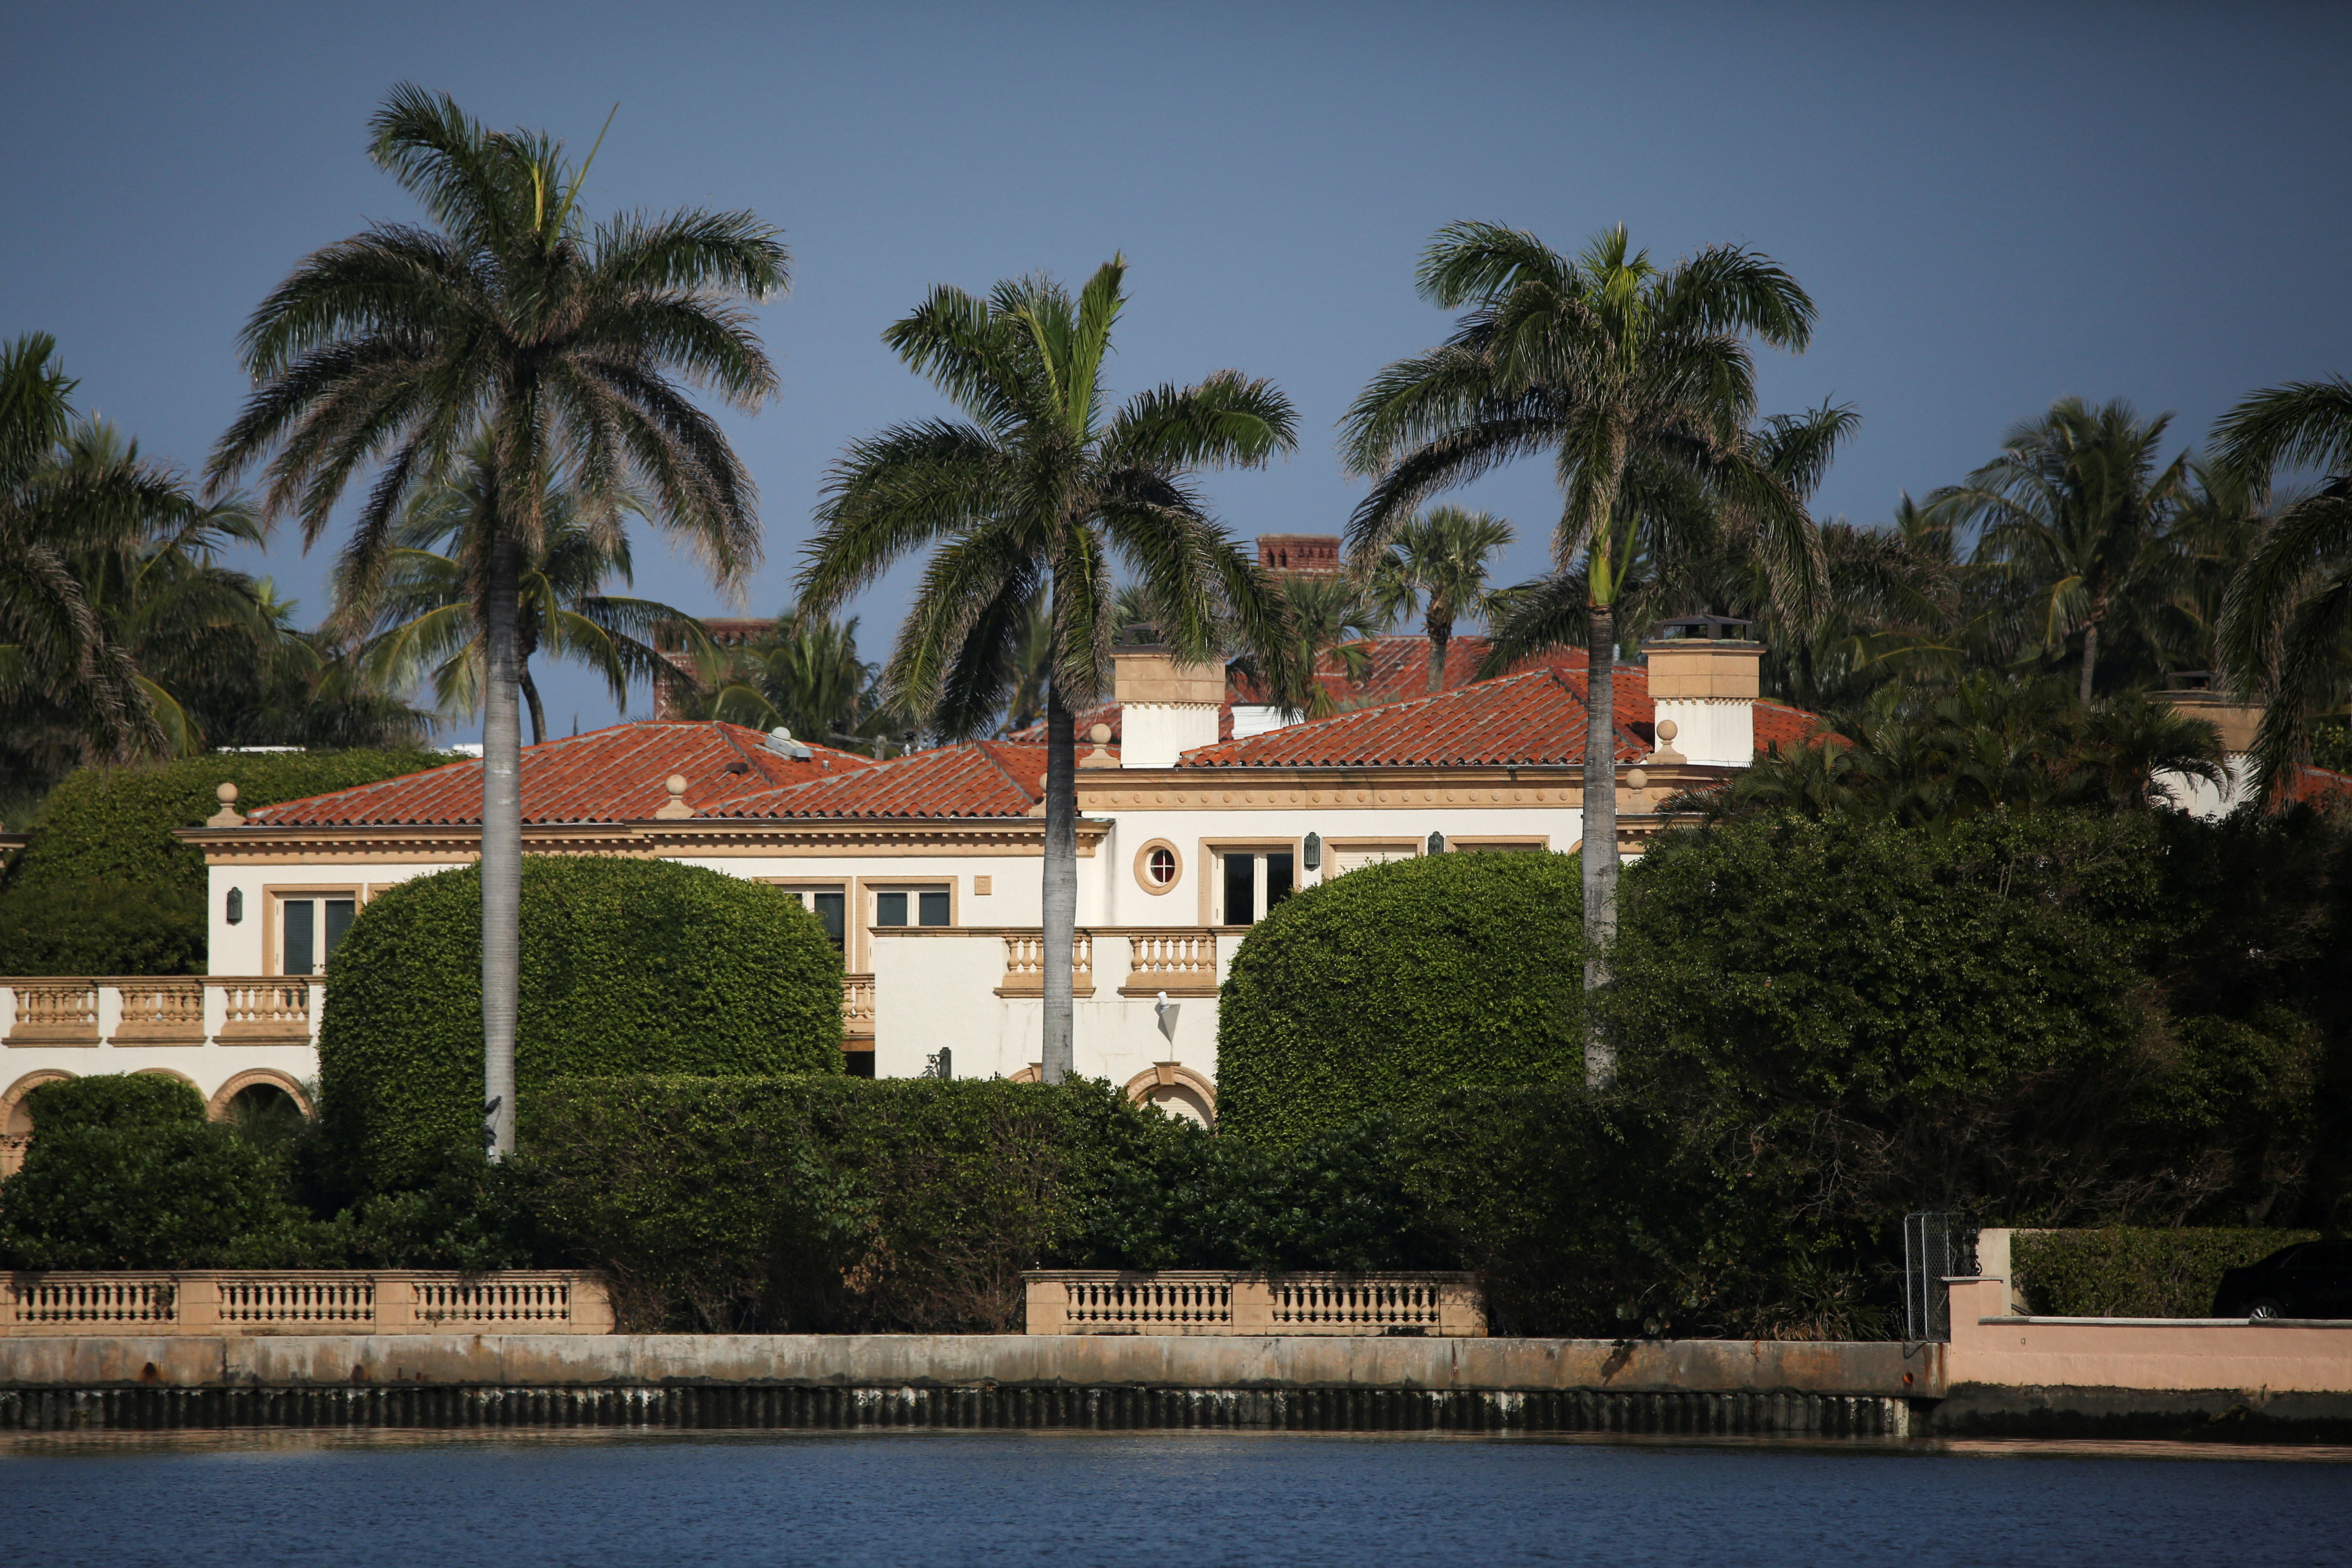 Former U.S. President Donald Trump's Mar-a-Lago resort is seen in Palm Beach